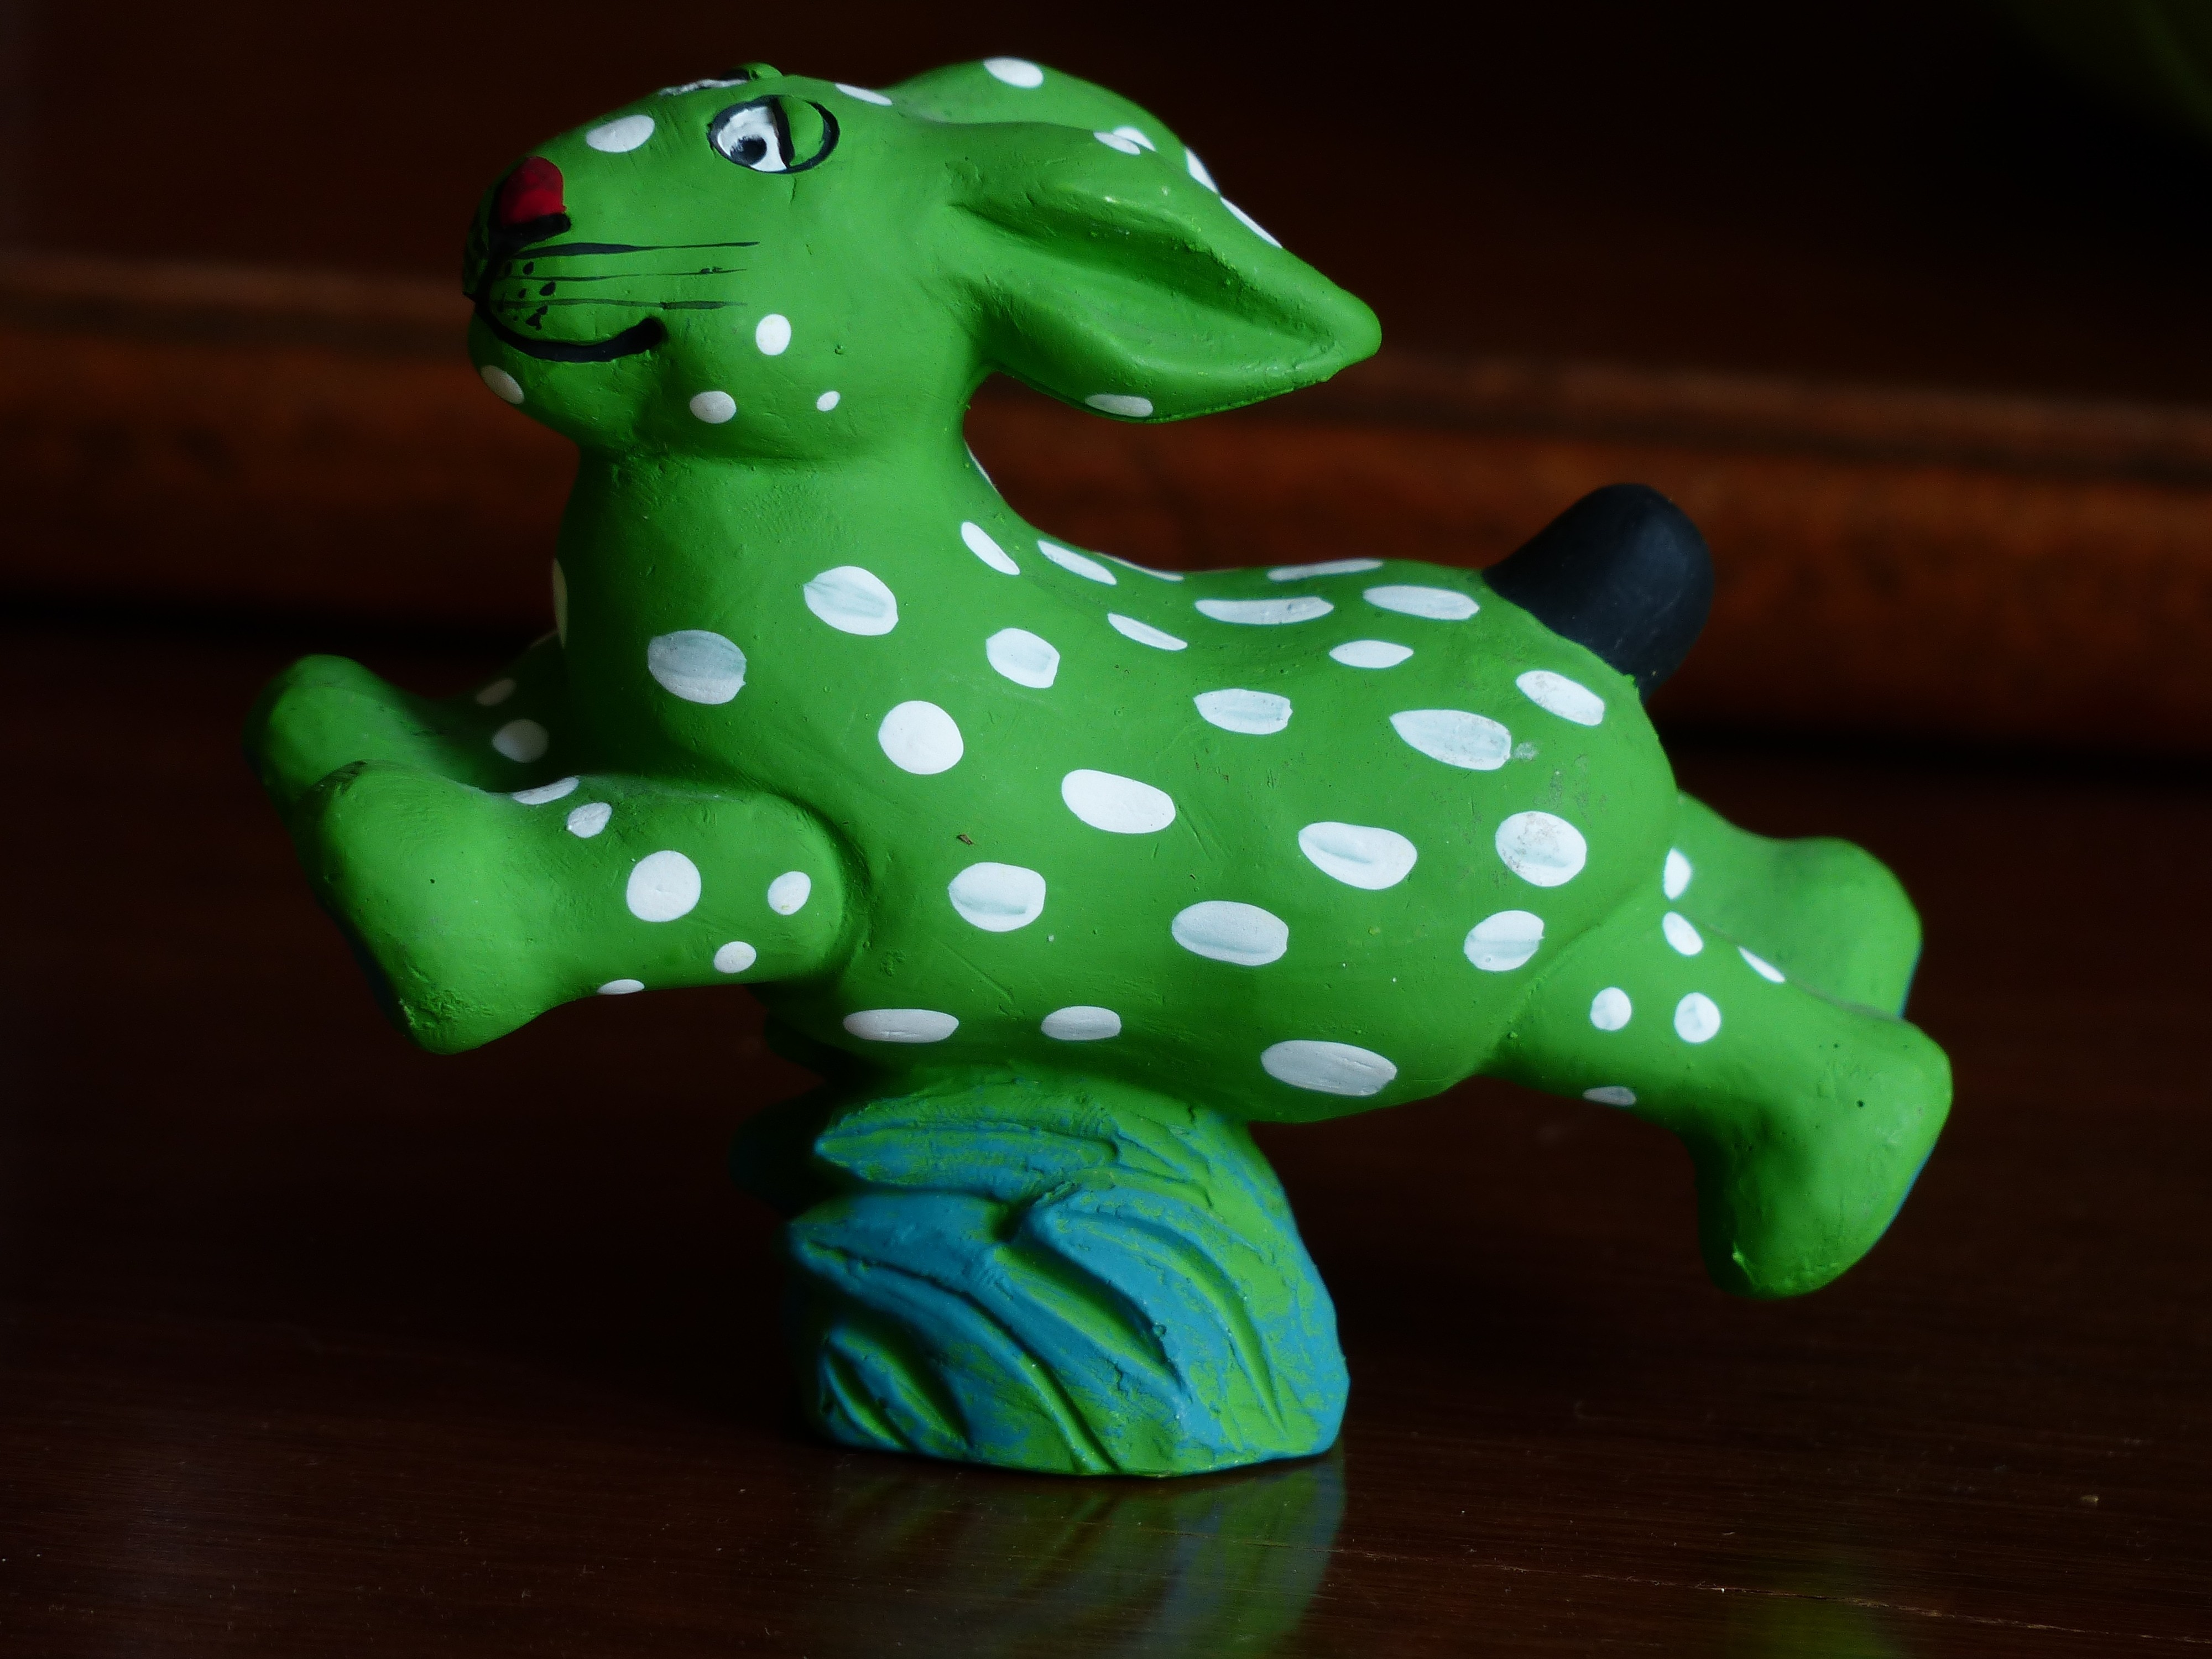 green and white rabbit figurine